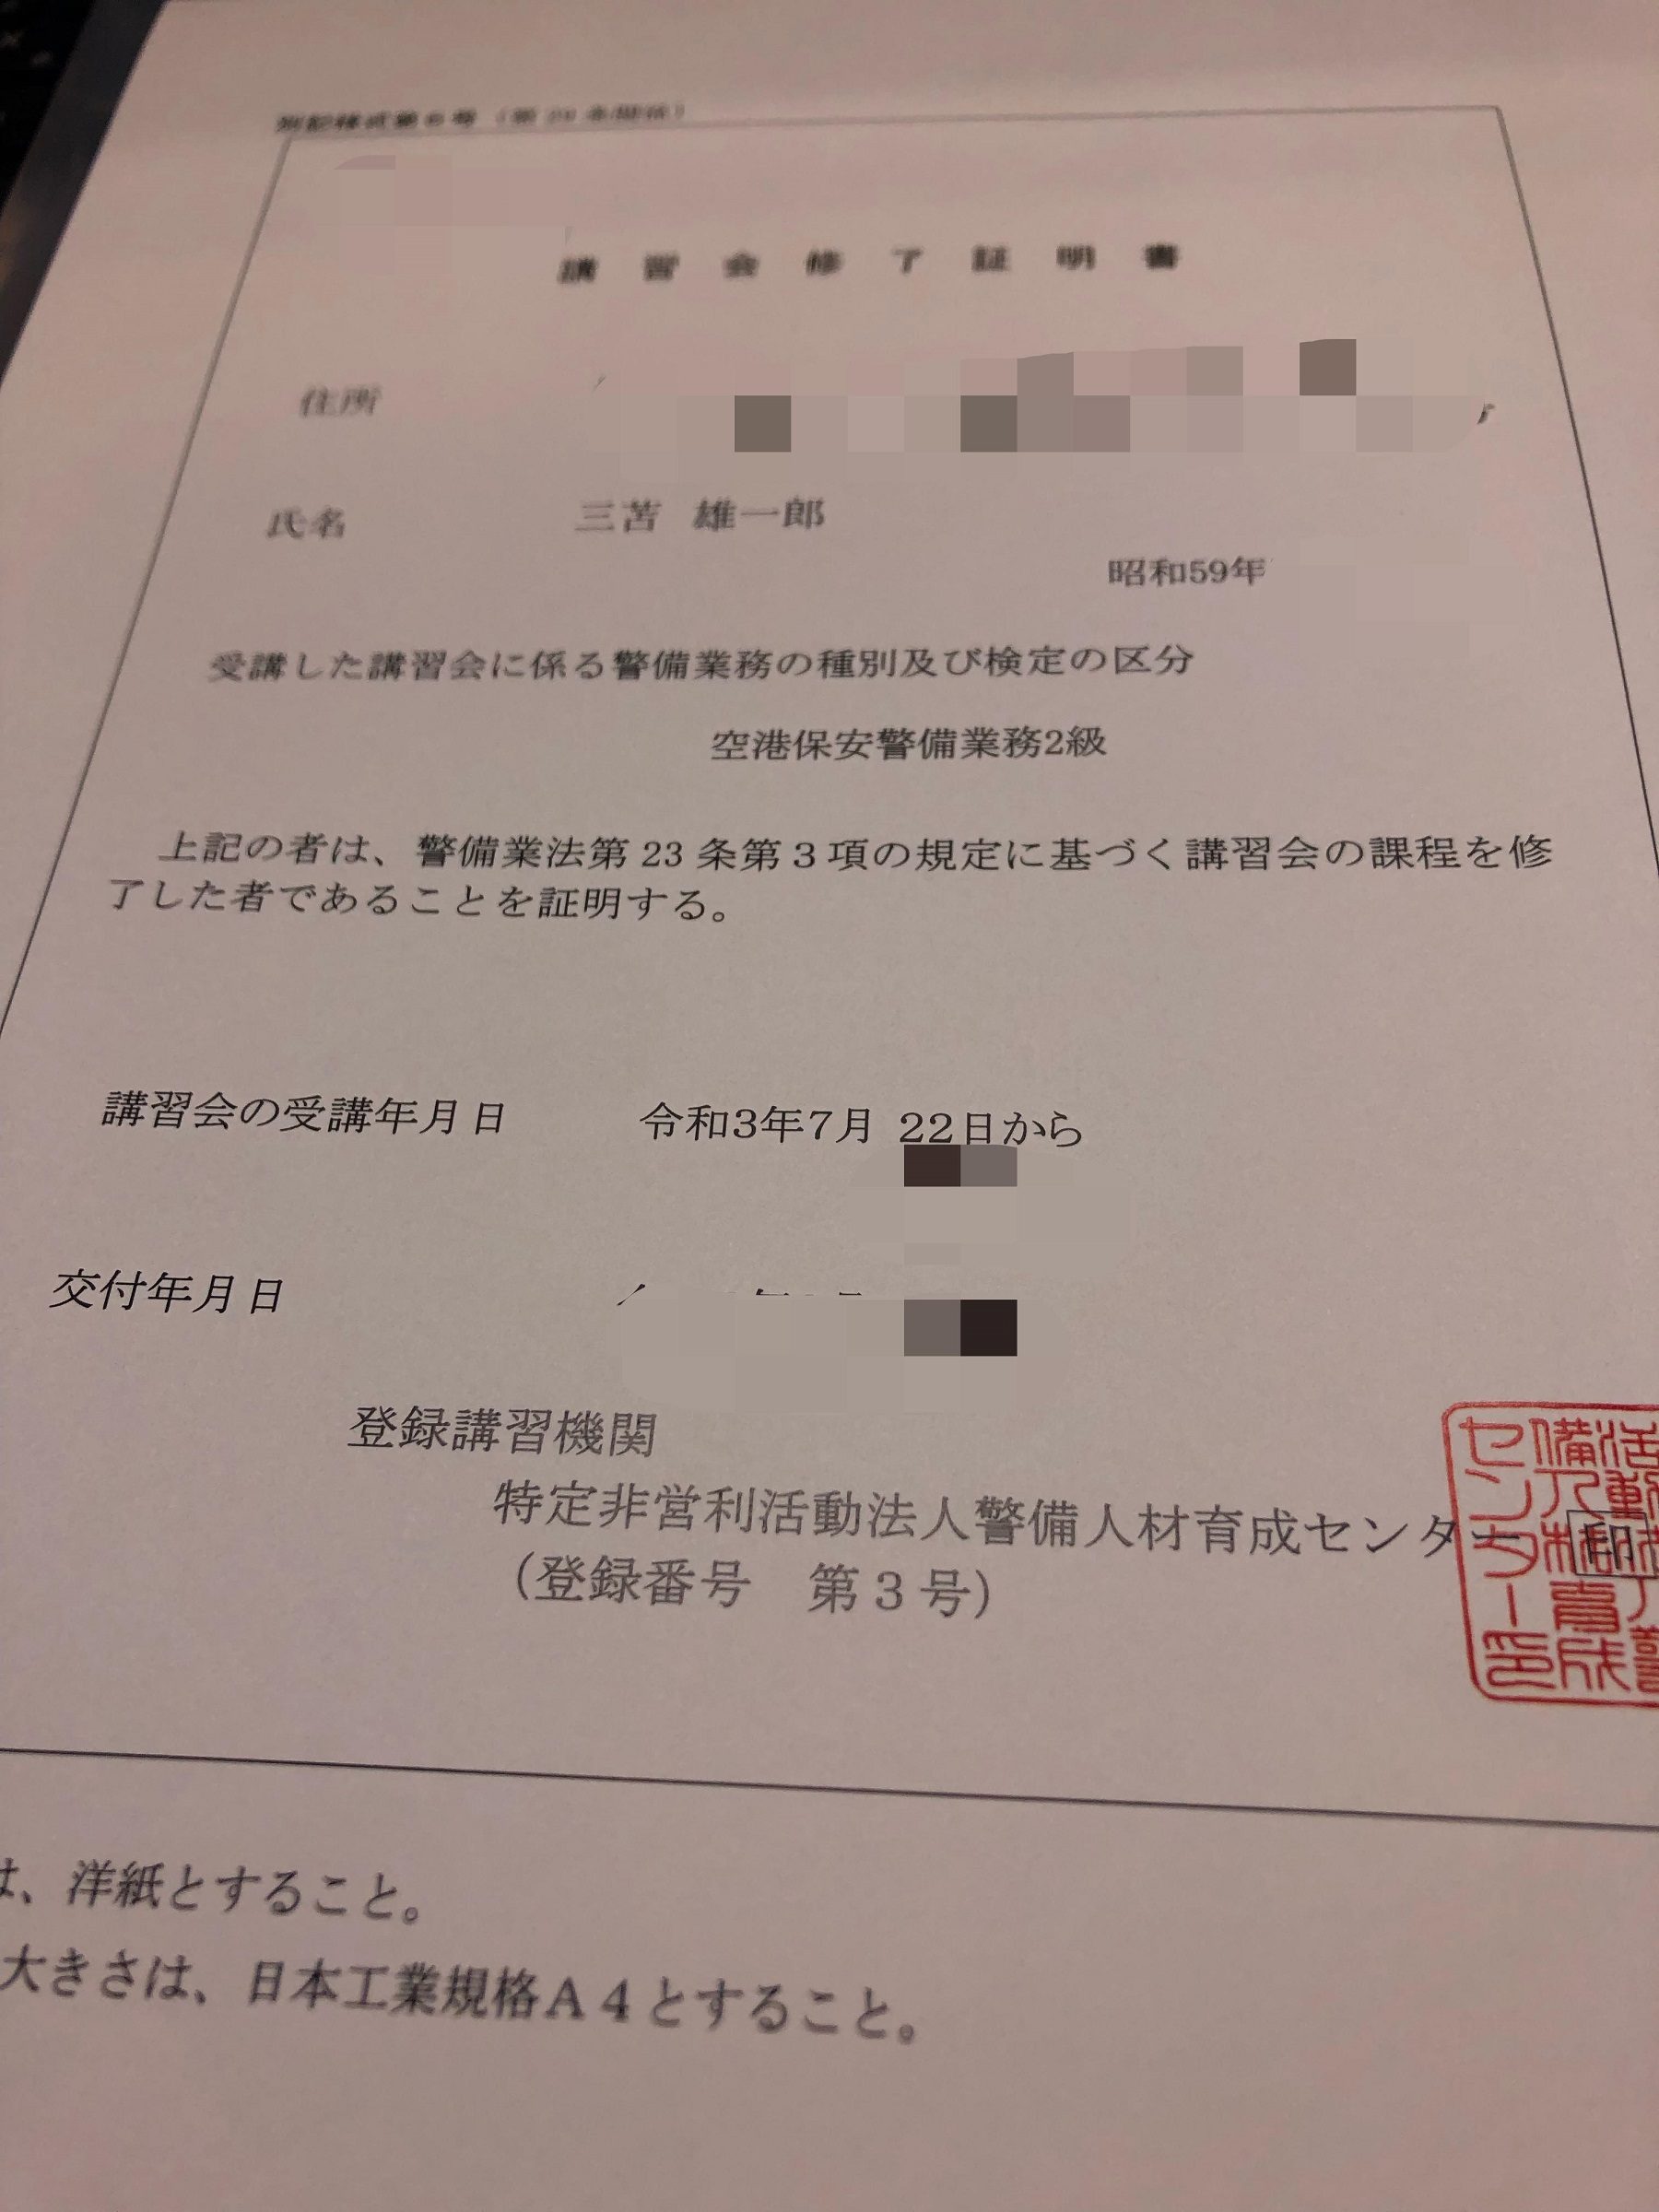 ATU　福岡　警備　空港保安2級　講習会修了証明書